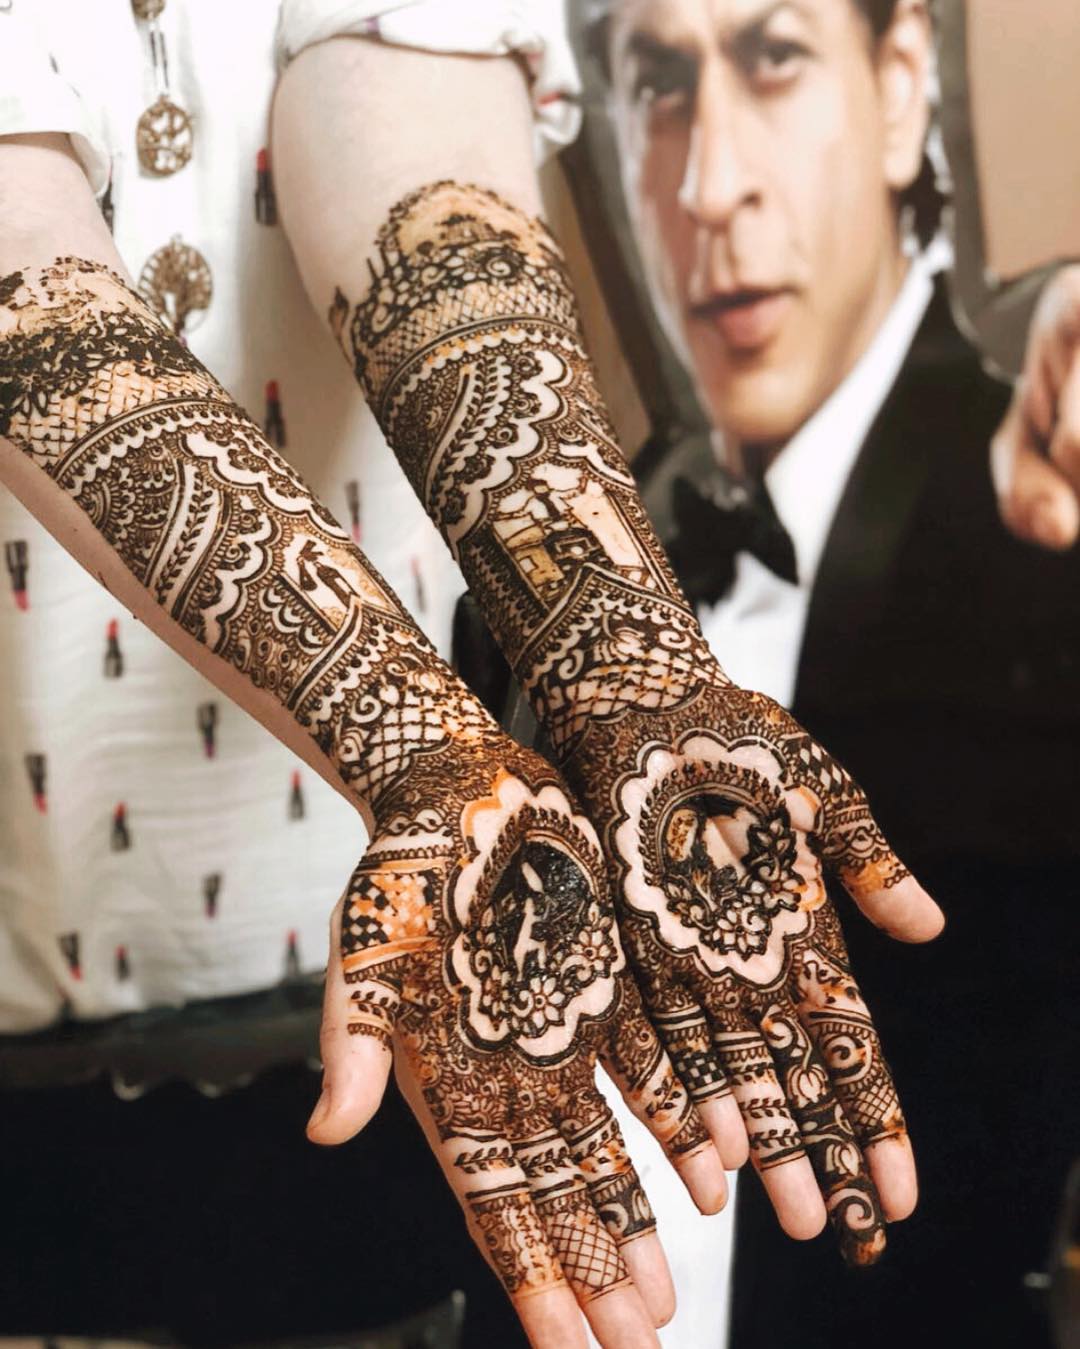 Lahaina Henna Tattoos & Hair Braiding - Super beautiful simple hand designs  with amazing nails!! Jazz up your hands with some fun henna designs 💕 . .  #westmaui #hennapro #henna #mauihenna #hennatattoo #